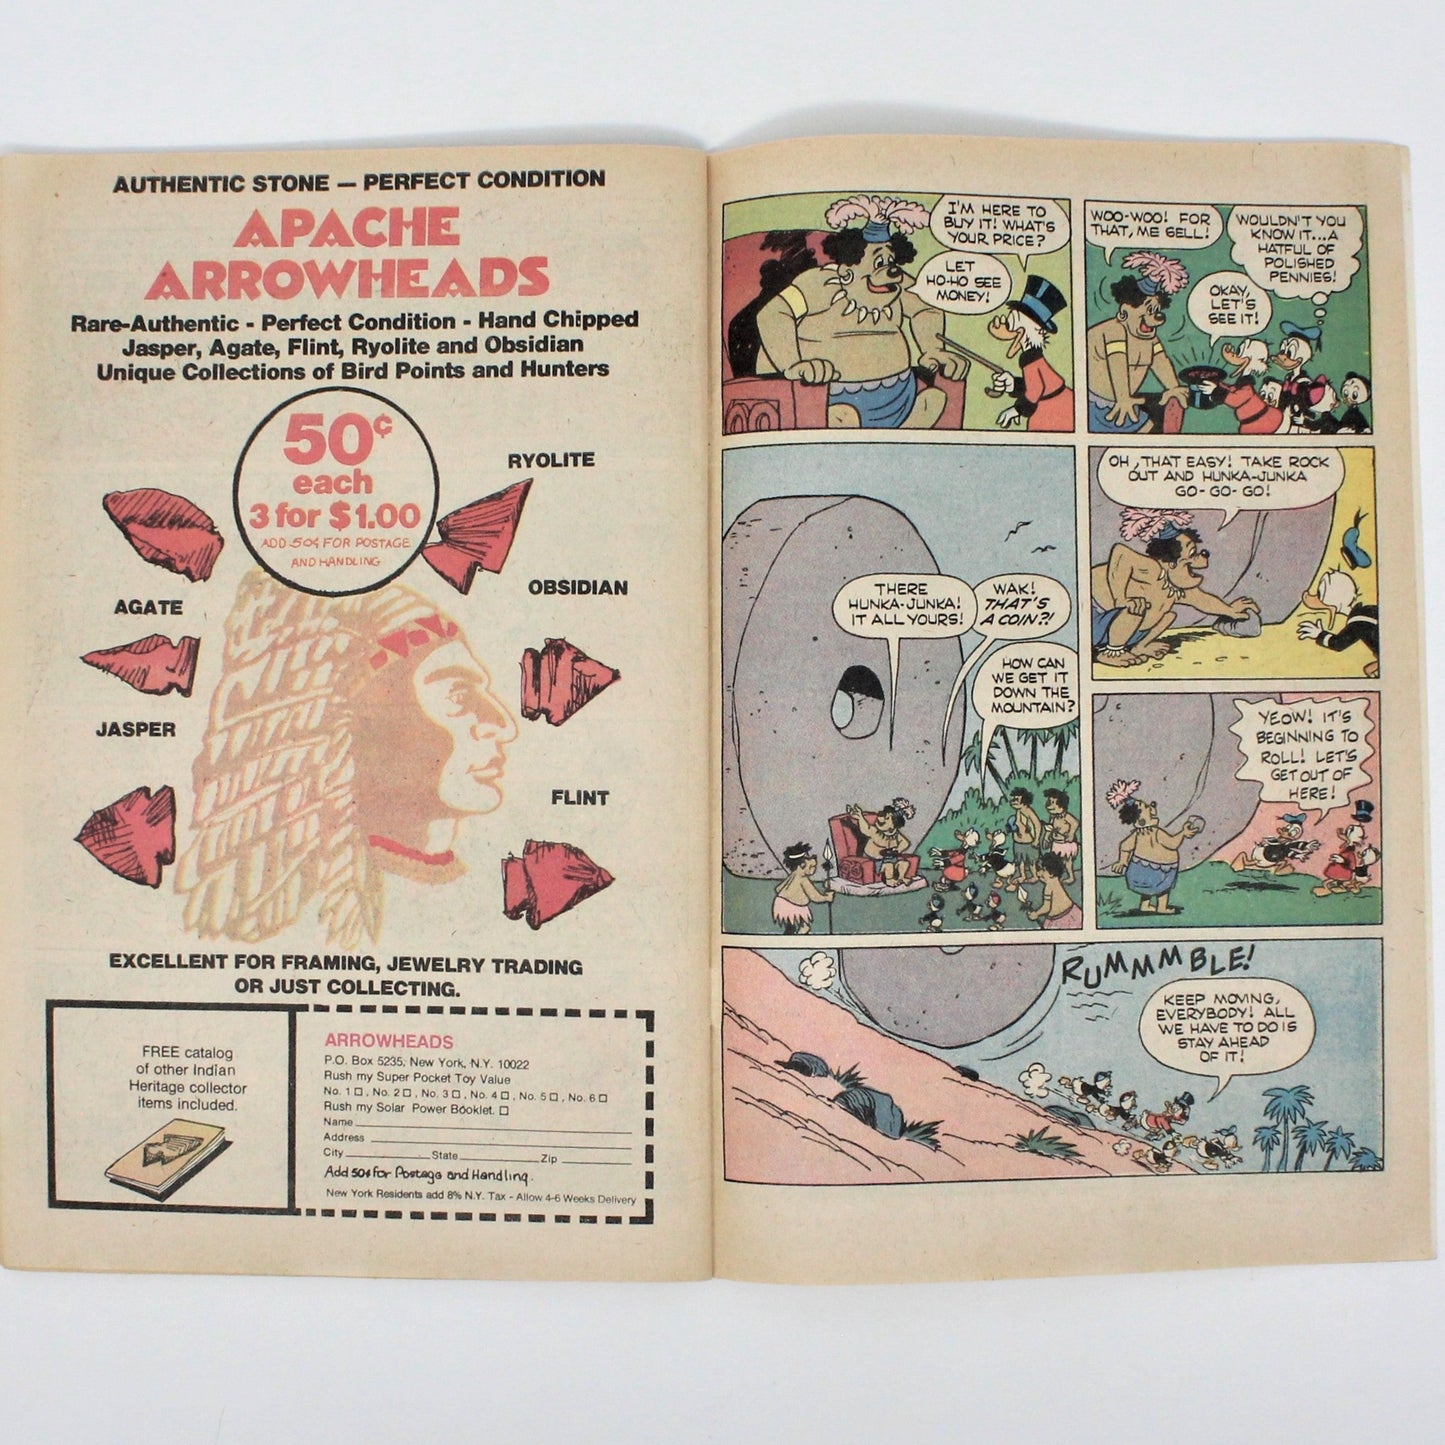 Comic Book, Gold Key, Walt Disney Comics, Uncle Scrooge #164, , Vintage 1979